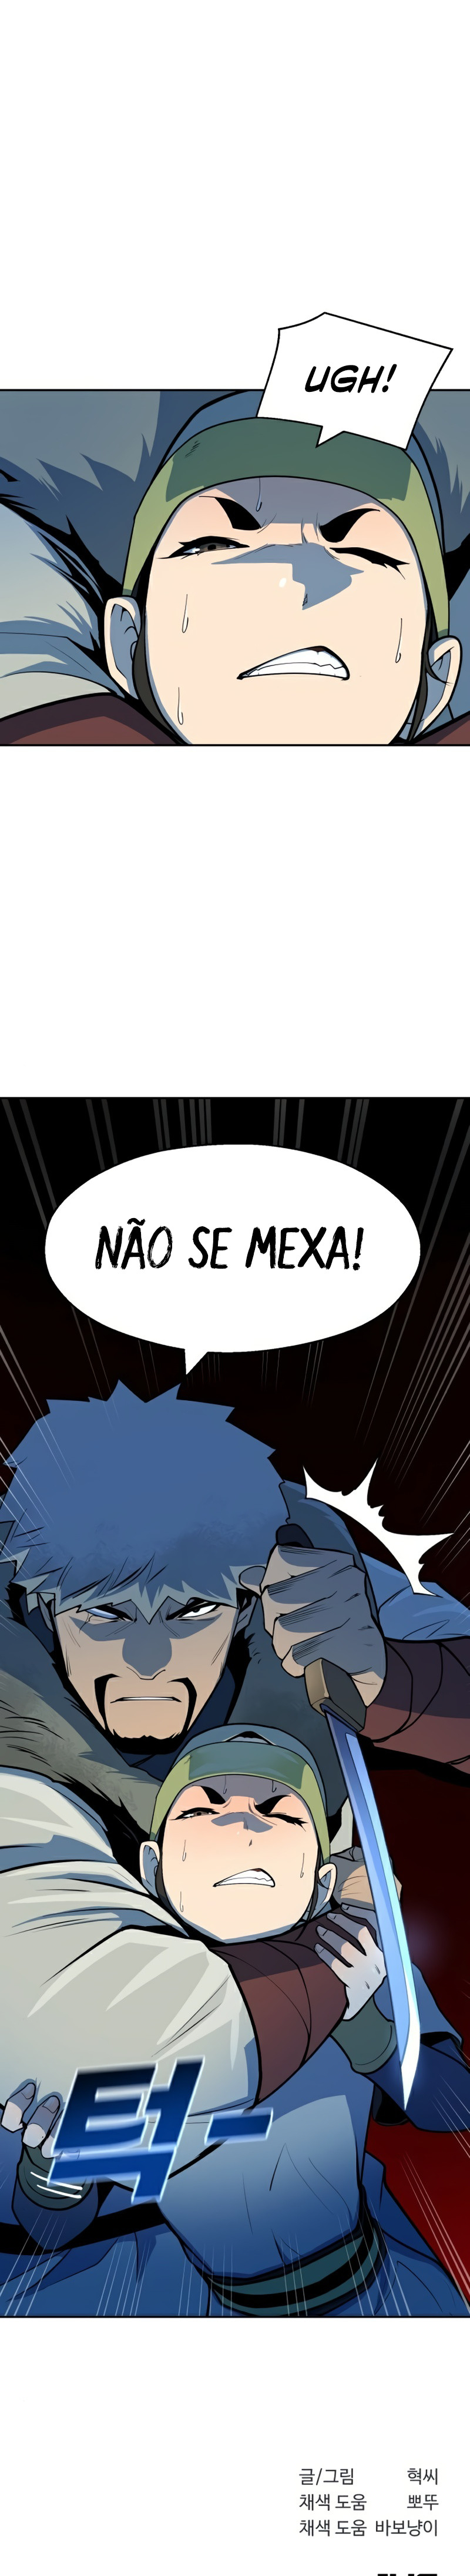 Teenage Swordsman - Capítulo 13  Mangá Host - Ler Online em Português